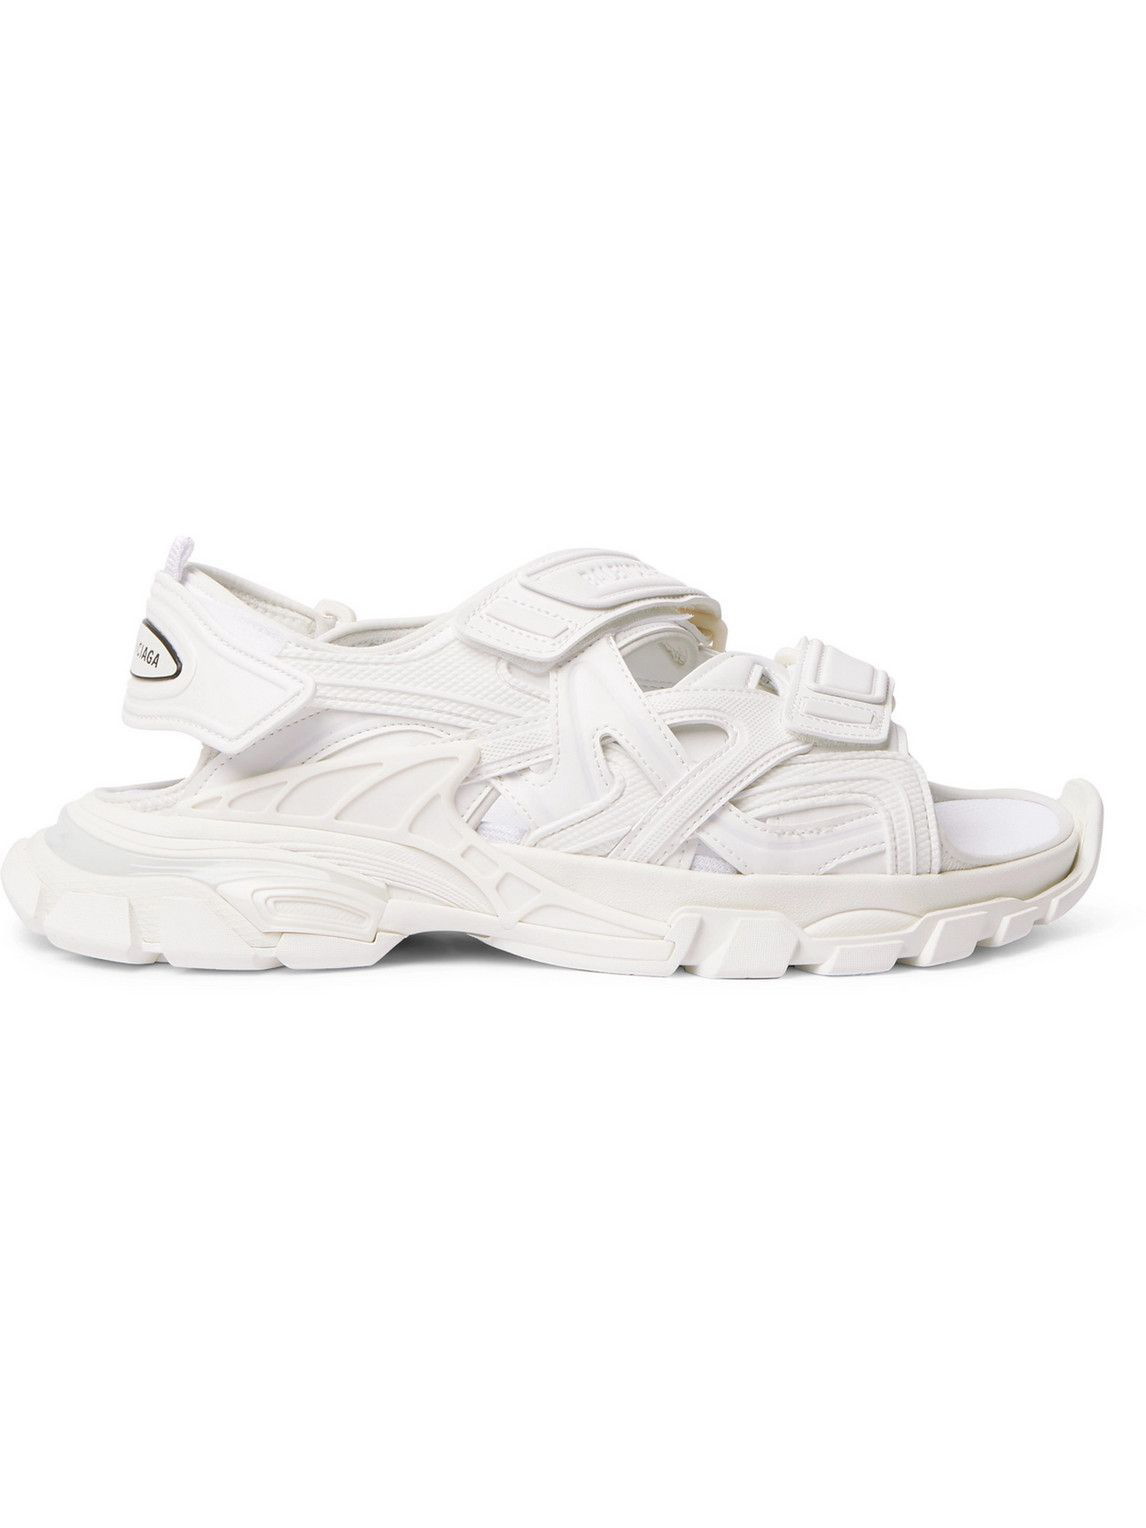 Balenciaga - Track Neoprene and Rubber Sandals - White Balenciaga